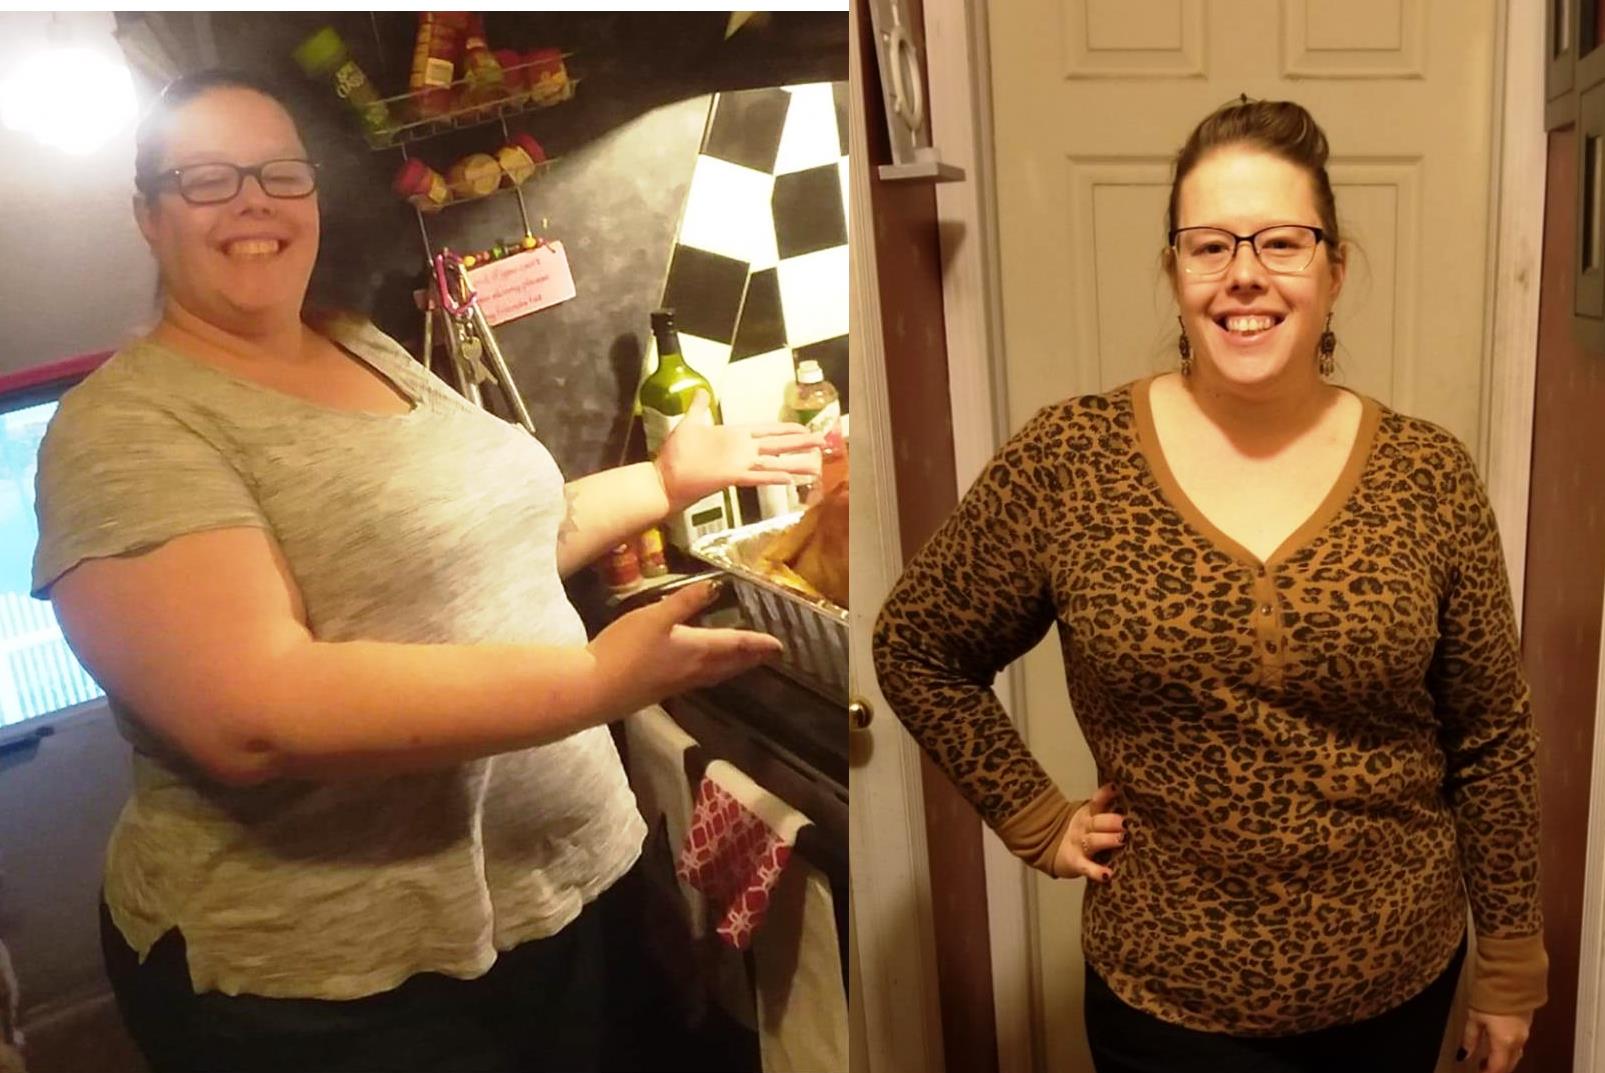 Gastric sleeve procedure gave Jennifer a new, healthier life